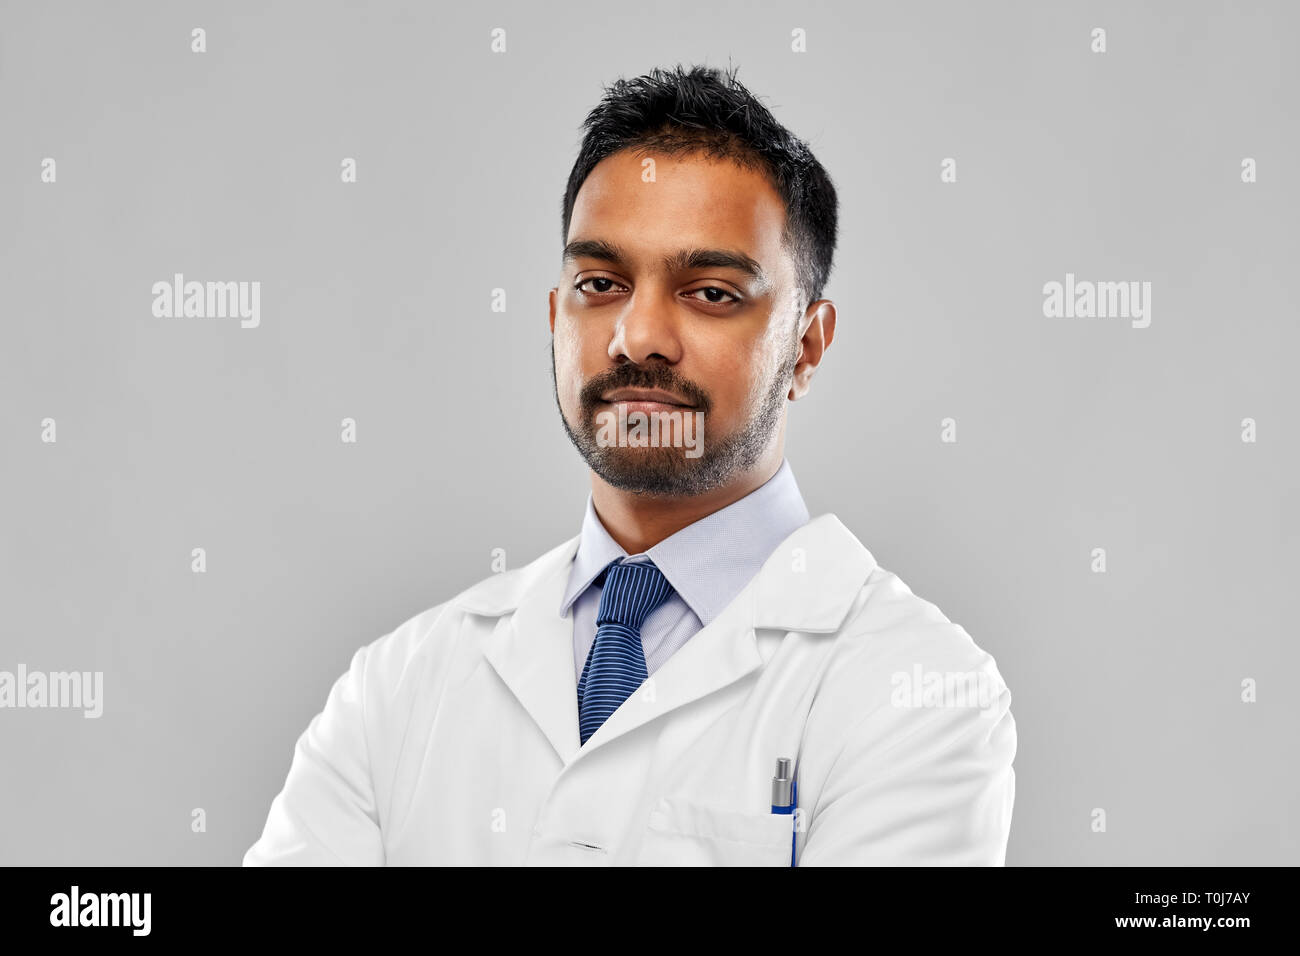 Indian médico o científico en bata blanca Foto de stock